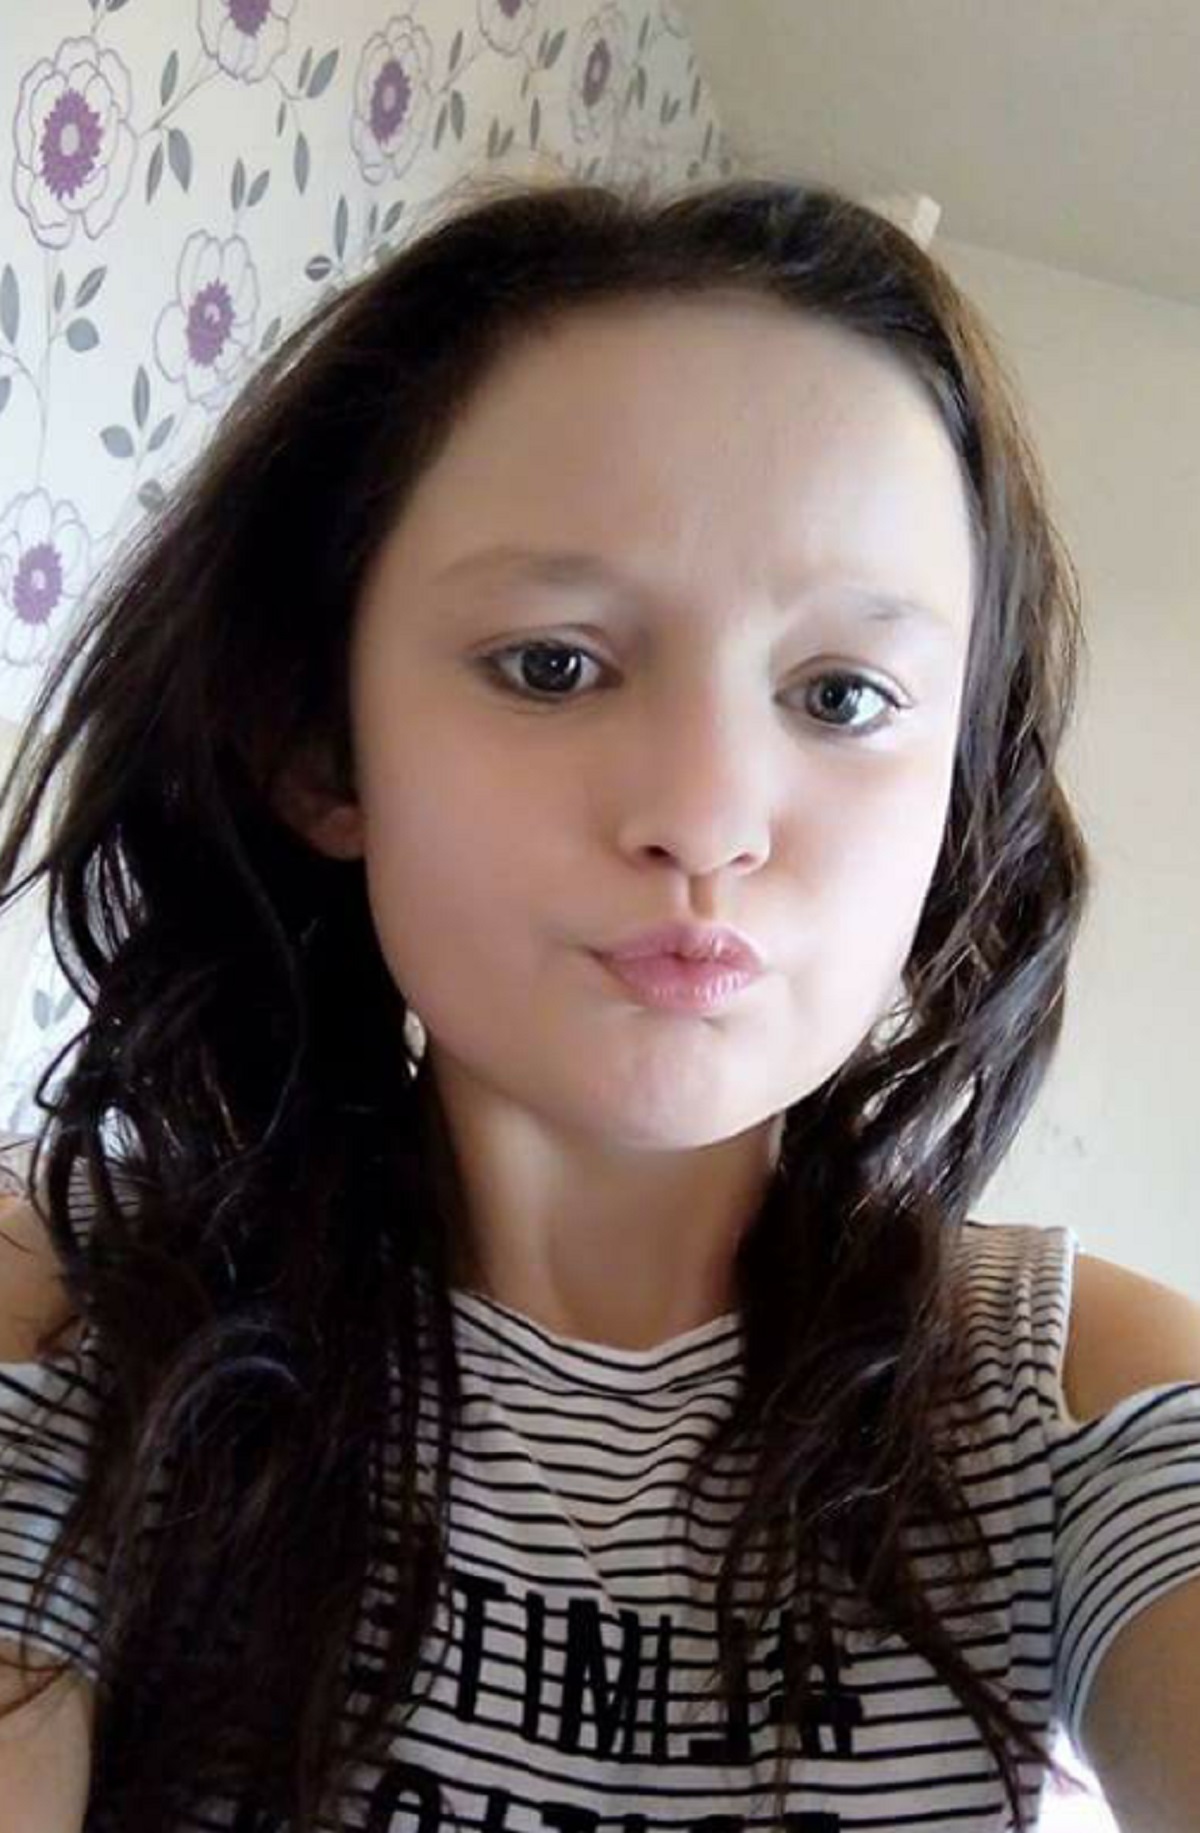 Bradford girl's life 'transformed' by liver transplant